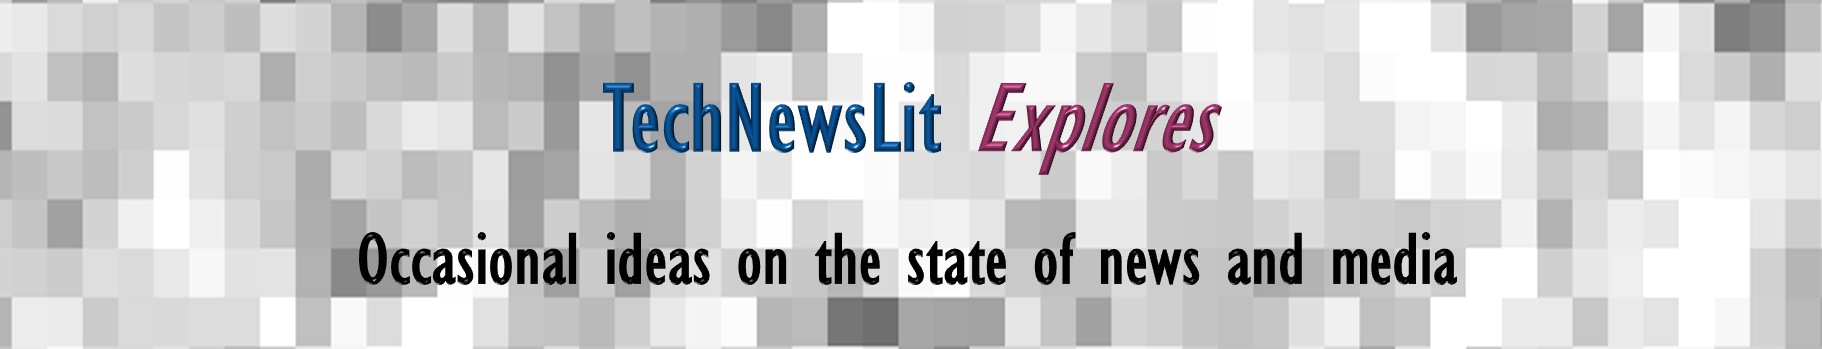 TechNewsLit Explores logo